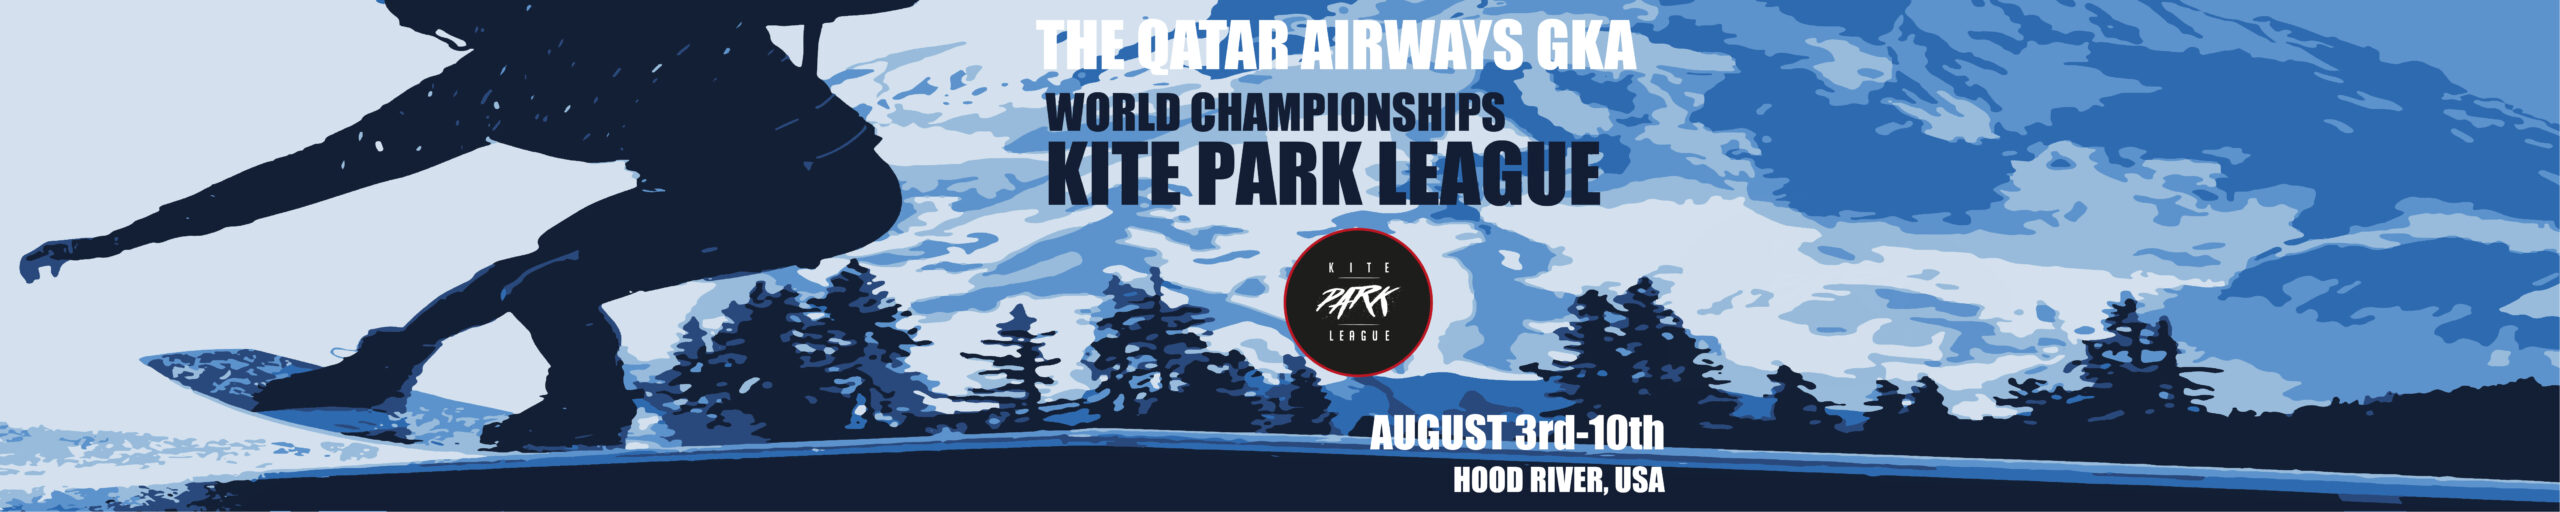 Image for Qatar Airways GKA Kite Park League World Championships Hood River, USA